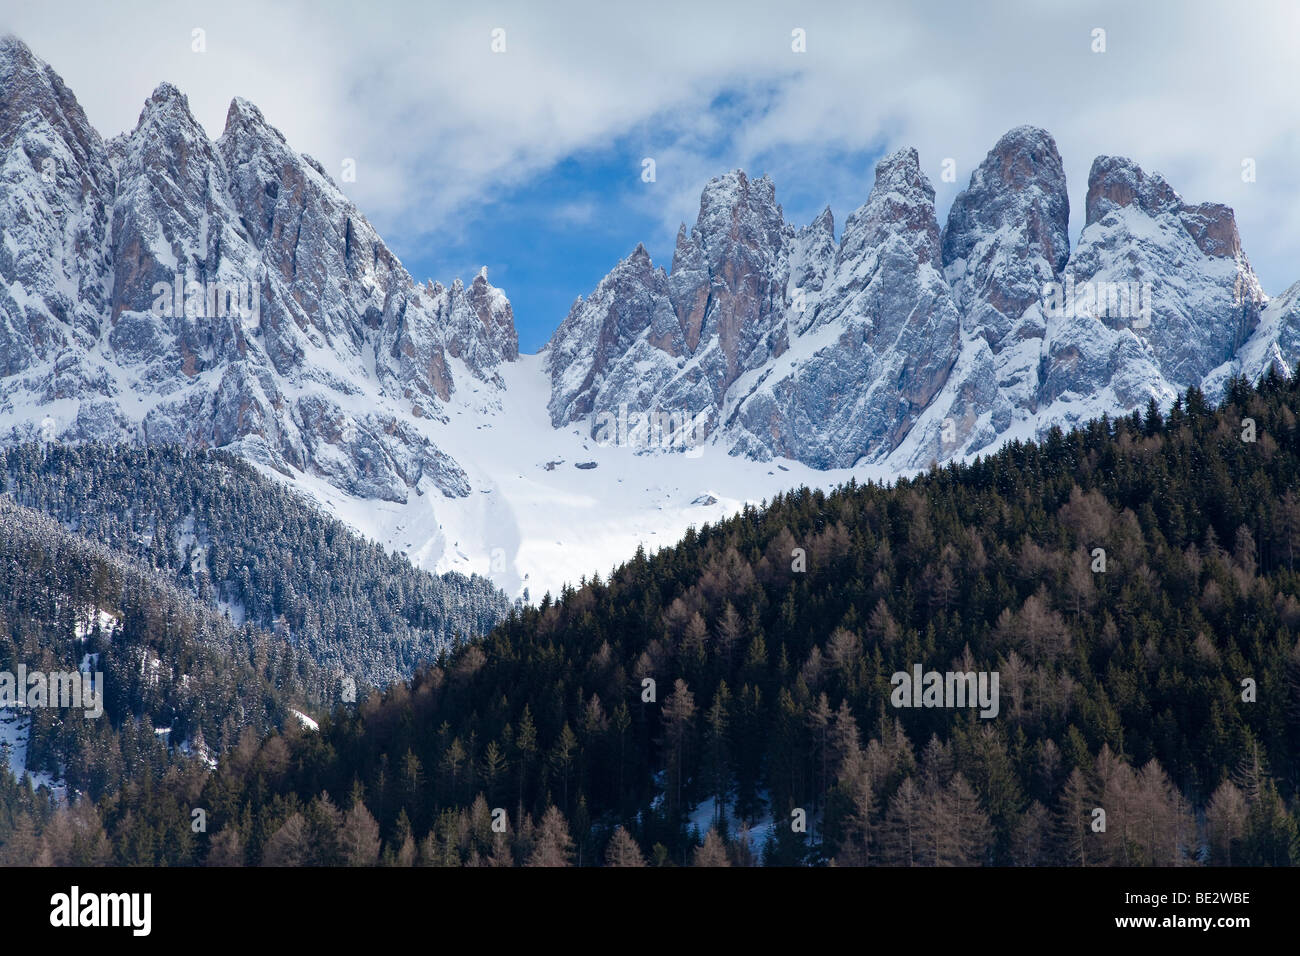 Saintes, Villnoss, Geisler Spitzen, Val di Funes, montagnes des Dolomites, Trentino-Alto Adige, Tyrol du Sud, Italie Banque D'Images